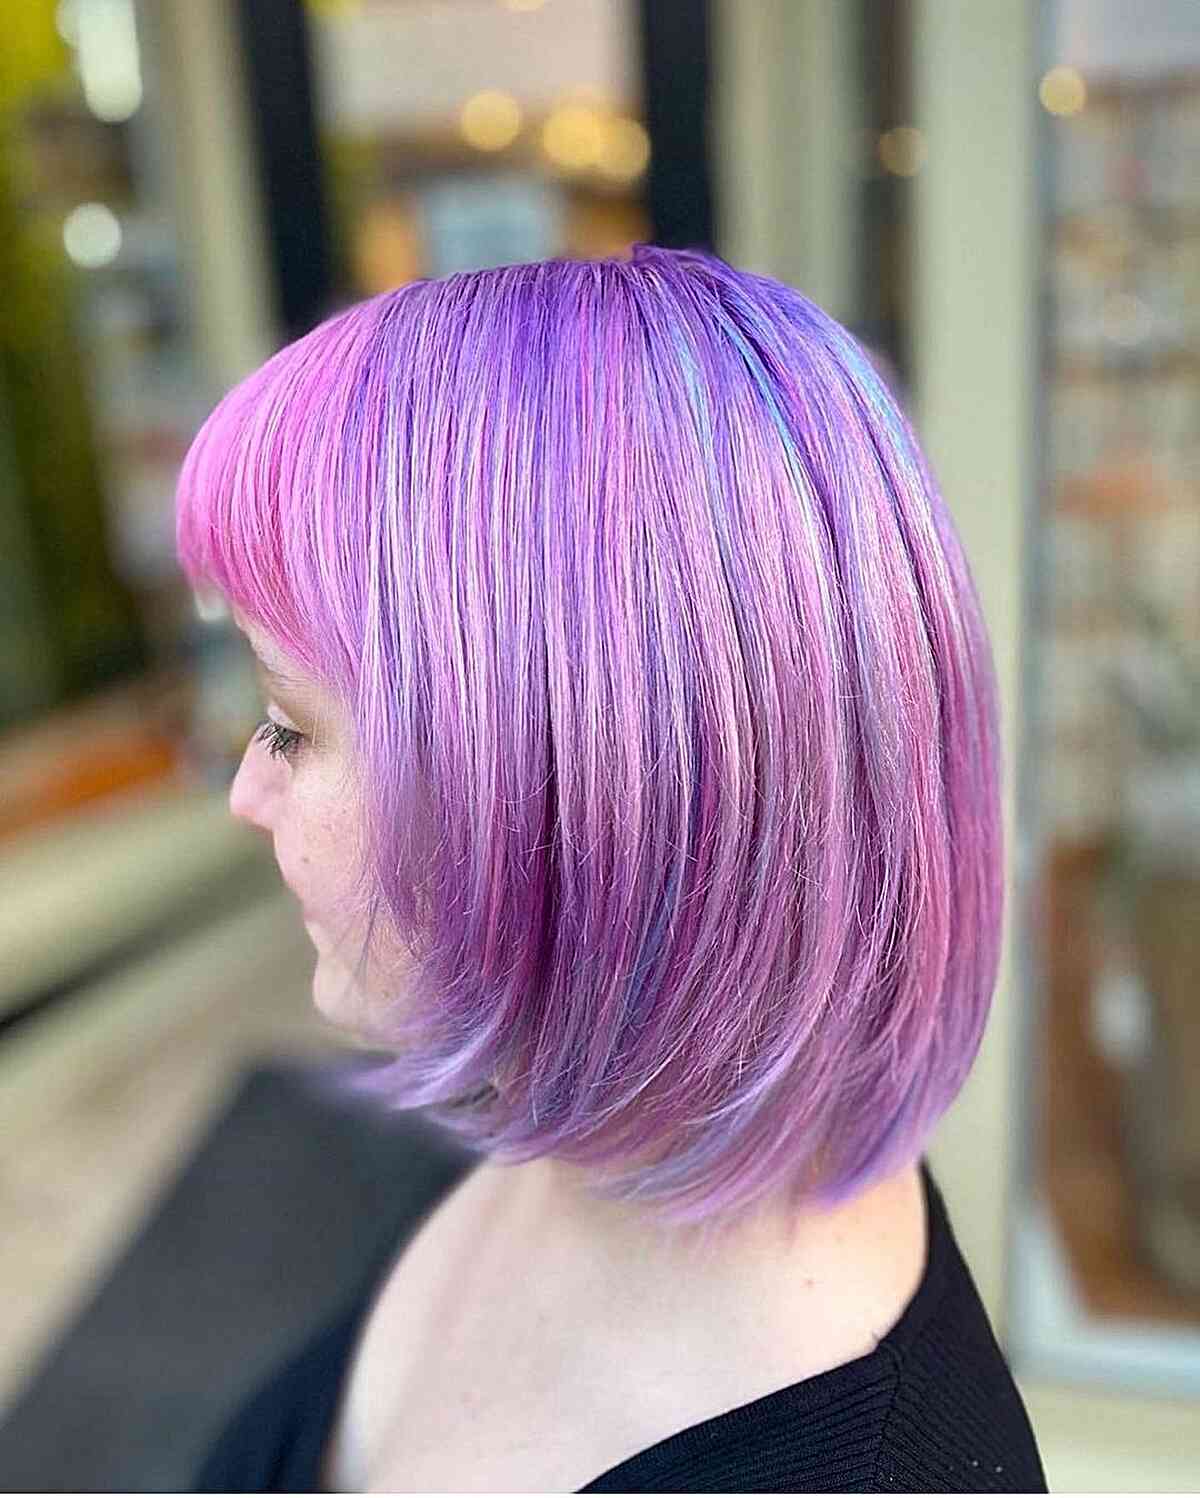 Vivid Cotton Candy Purple Highlights on Short Pink Hair